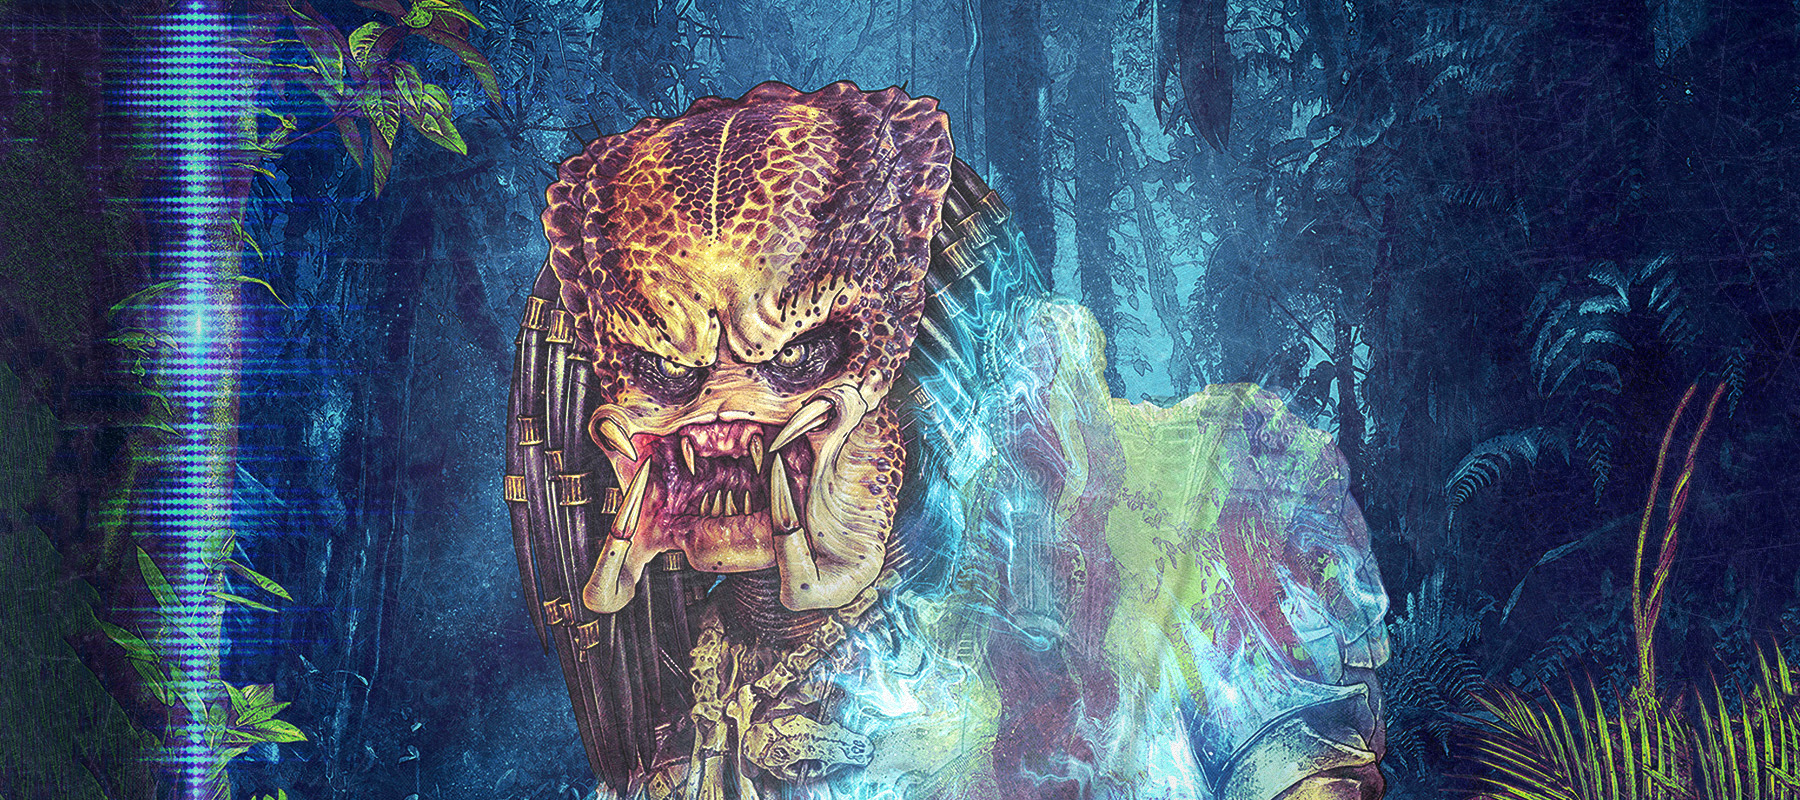 Predator Poster Designs